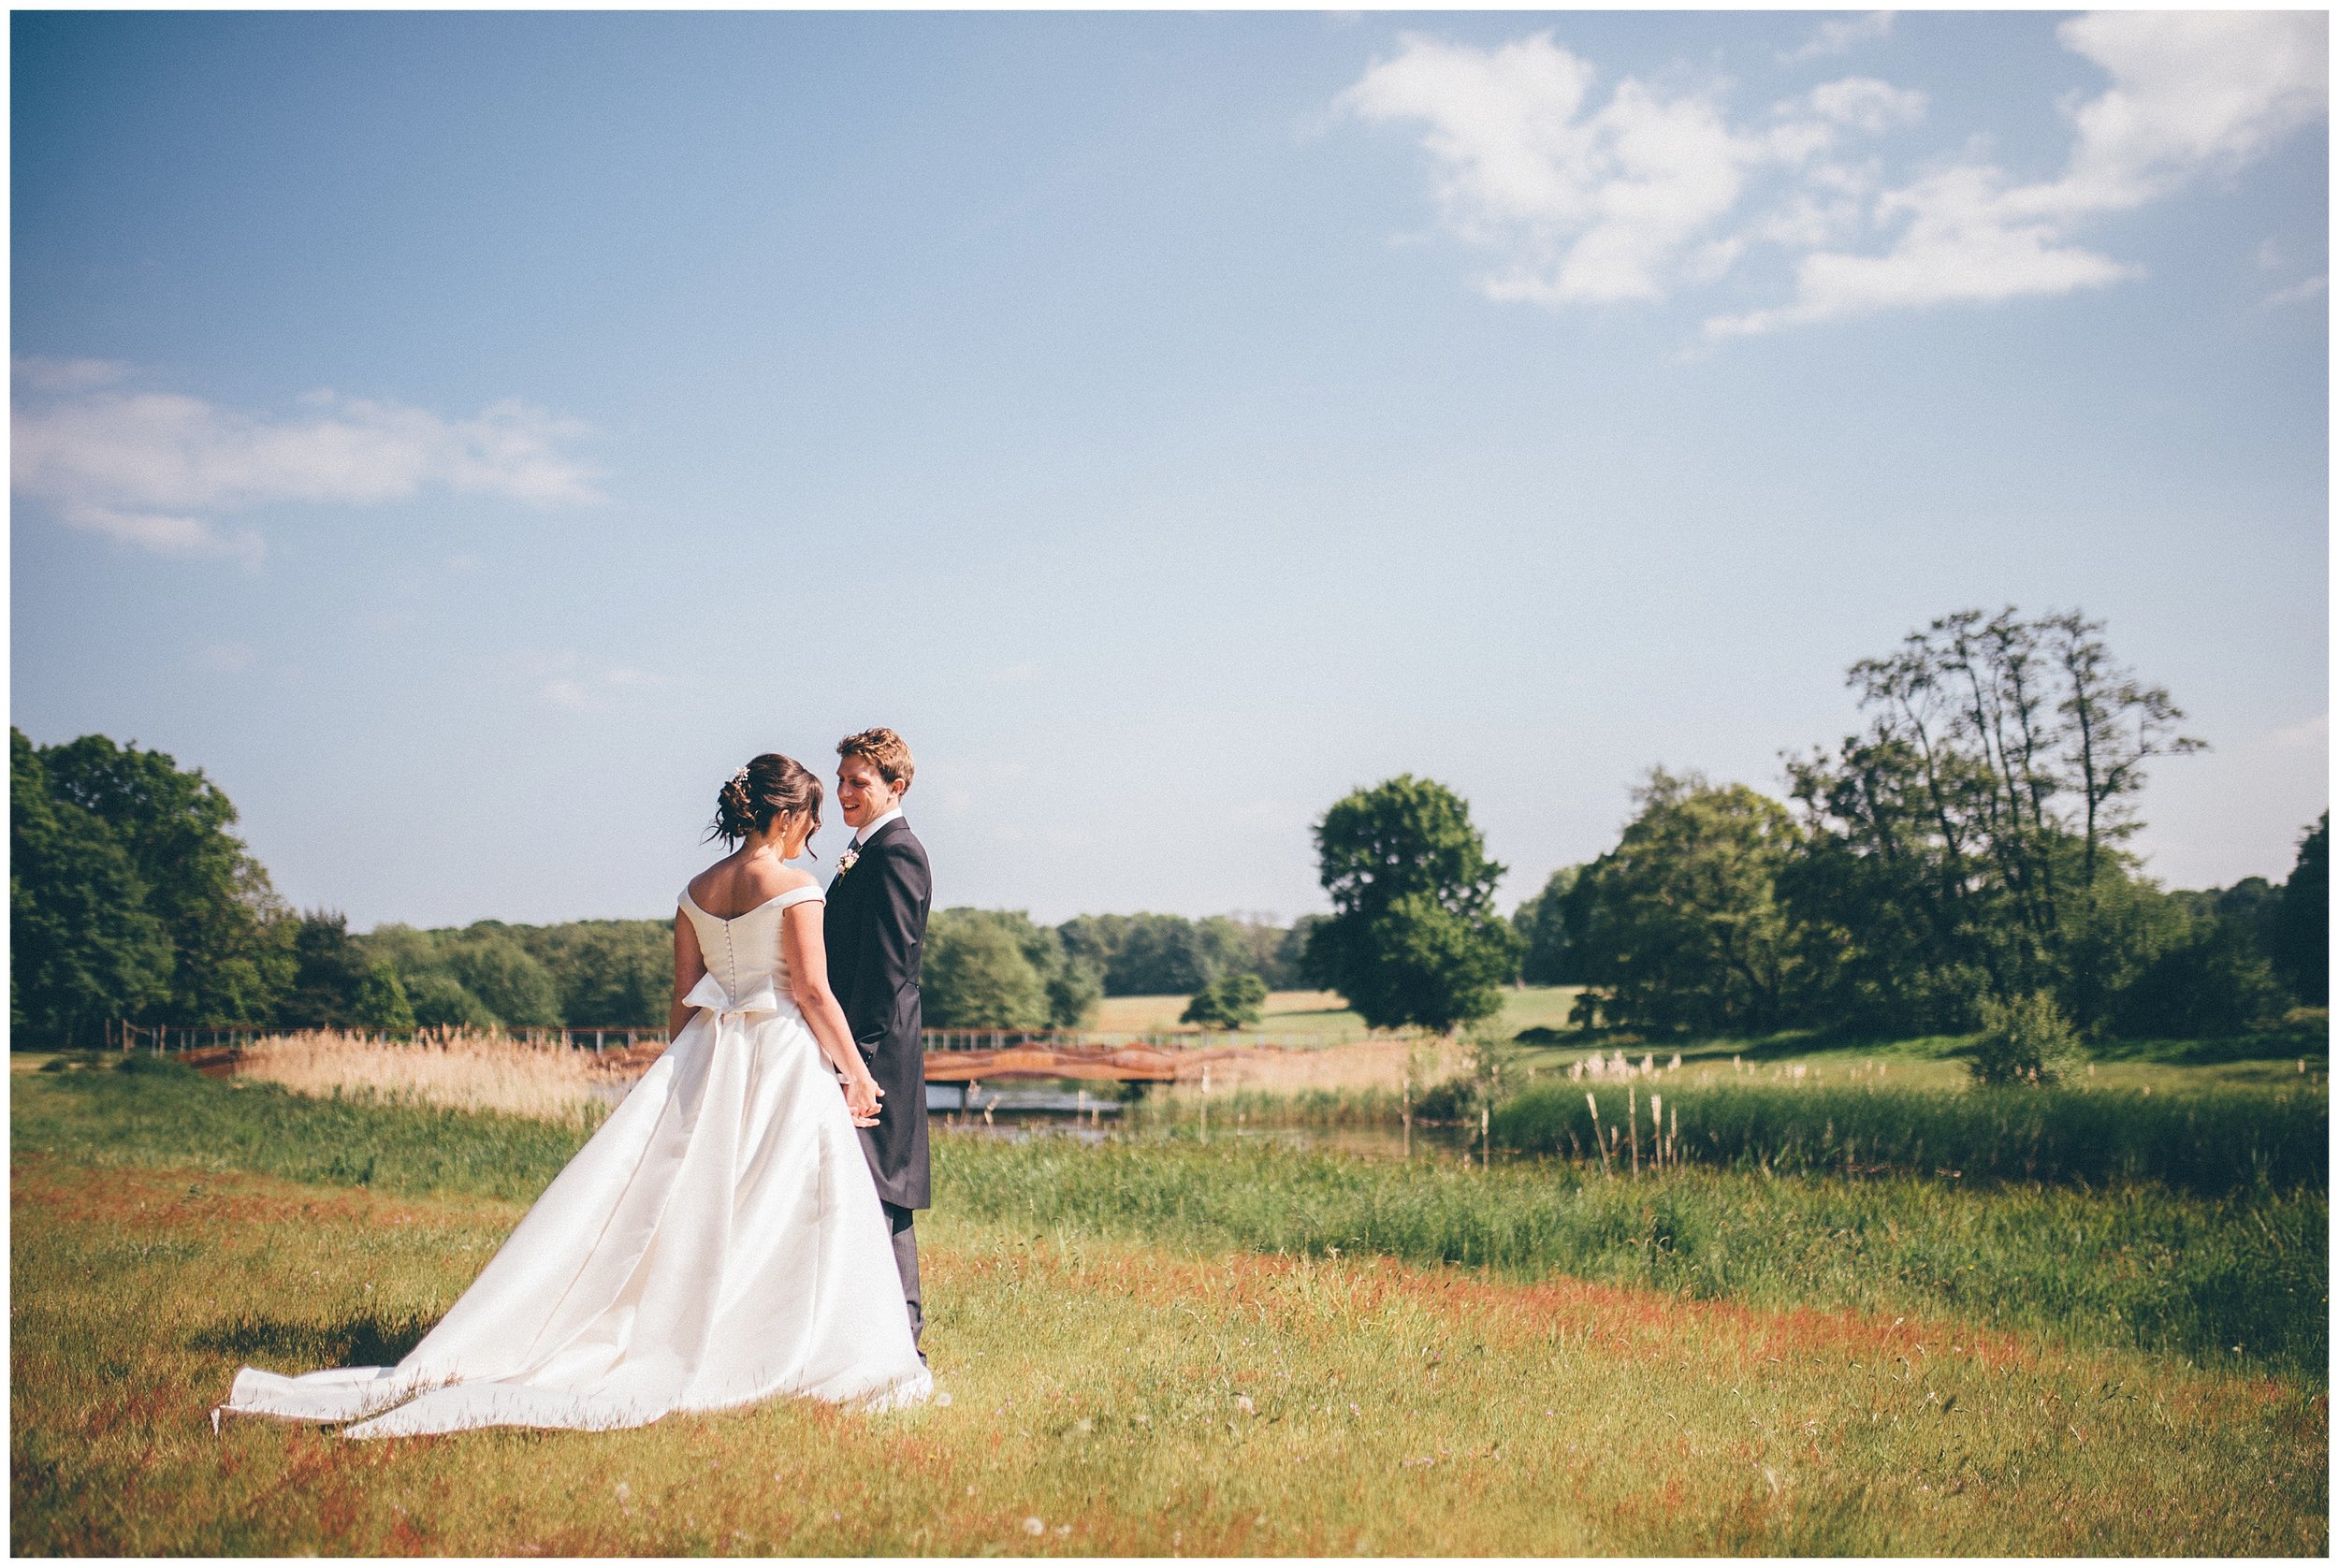 Bride and groom at Henham Park wedding barns.